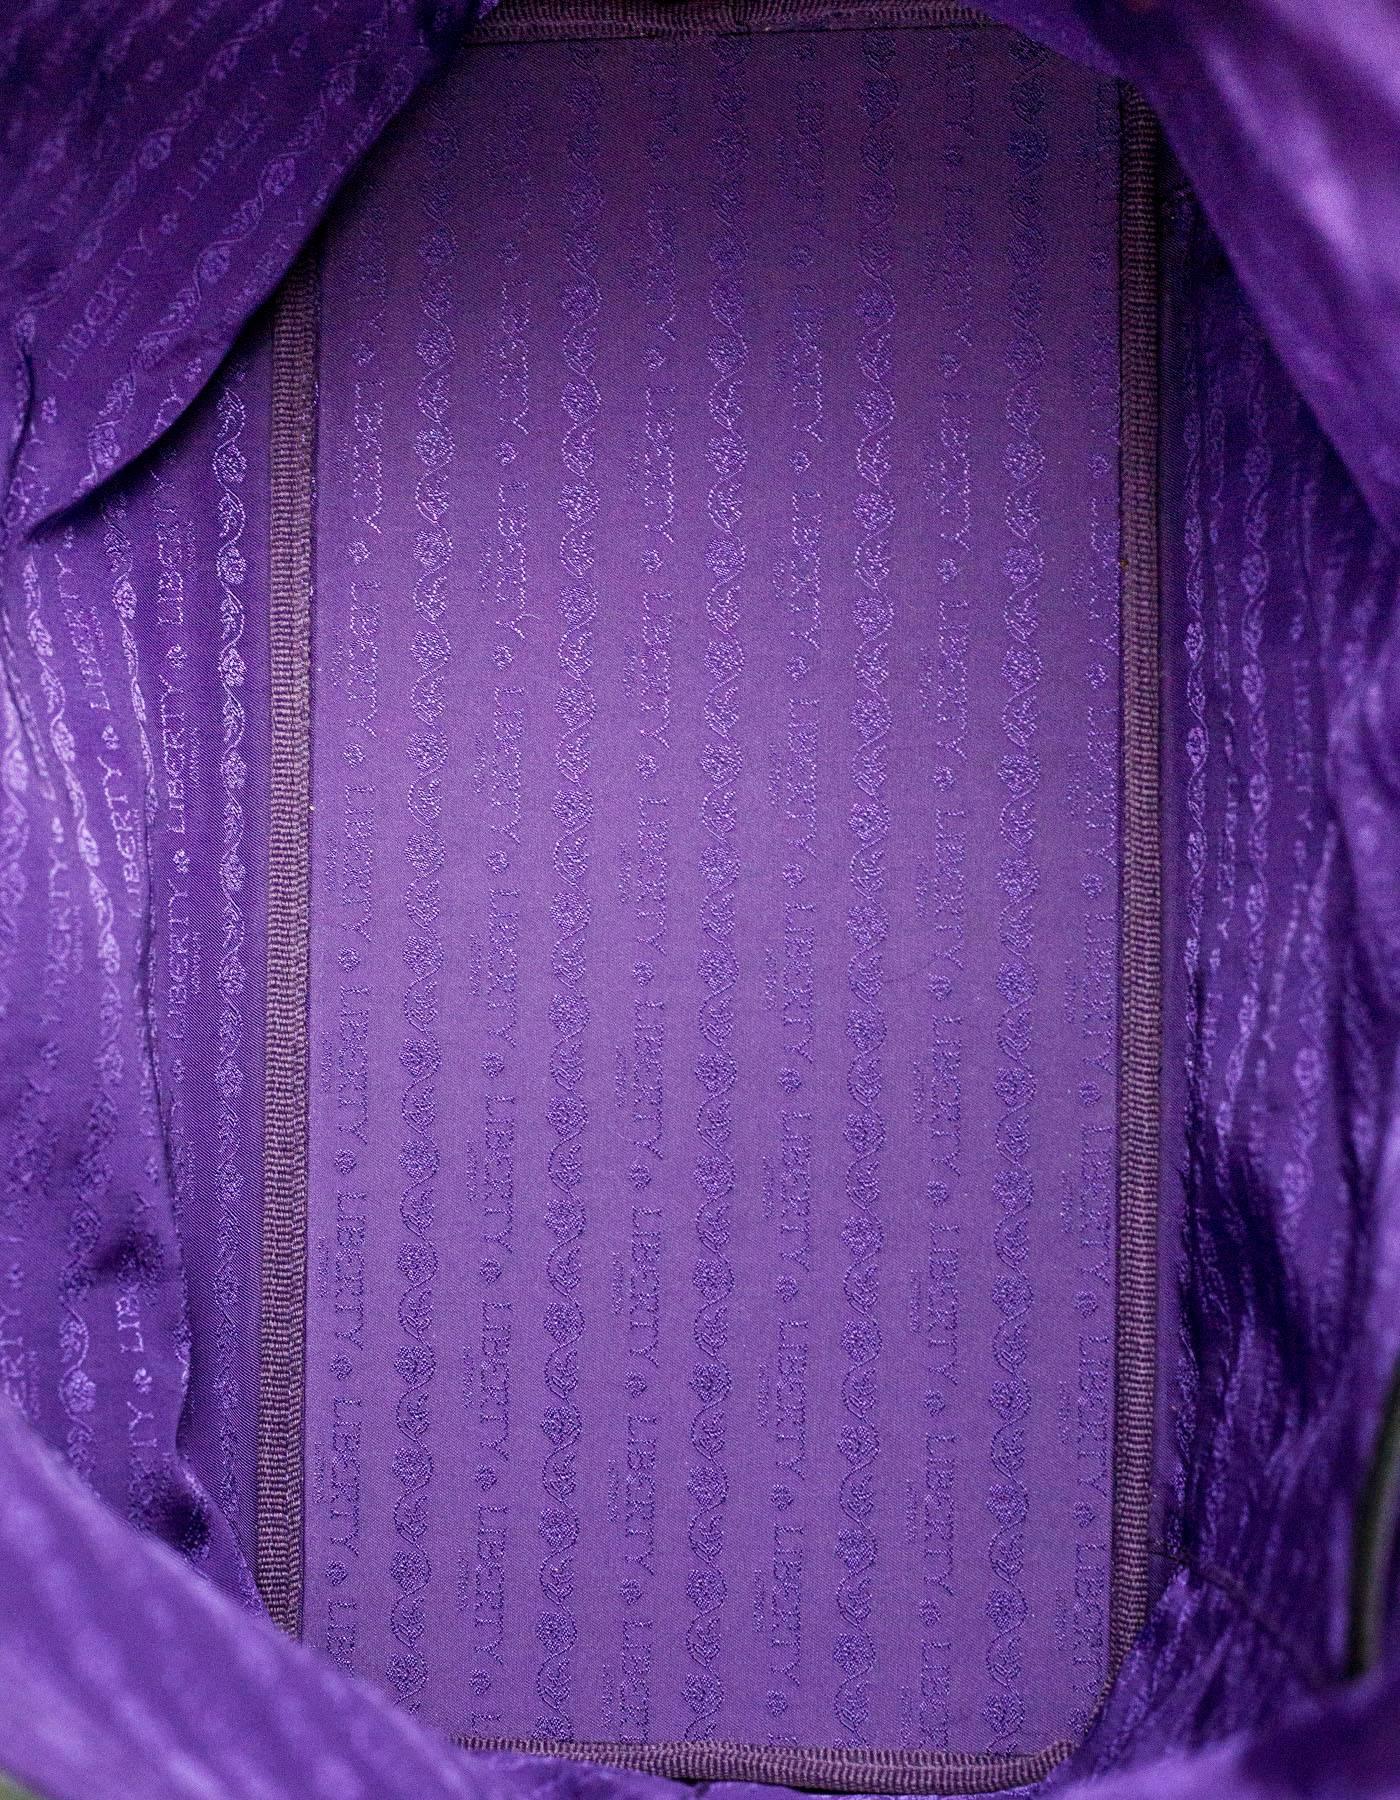 Black Liberty London Purple Marlborough Iphis-Print Tote Bag rt. $595